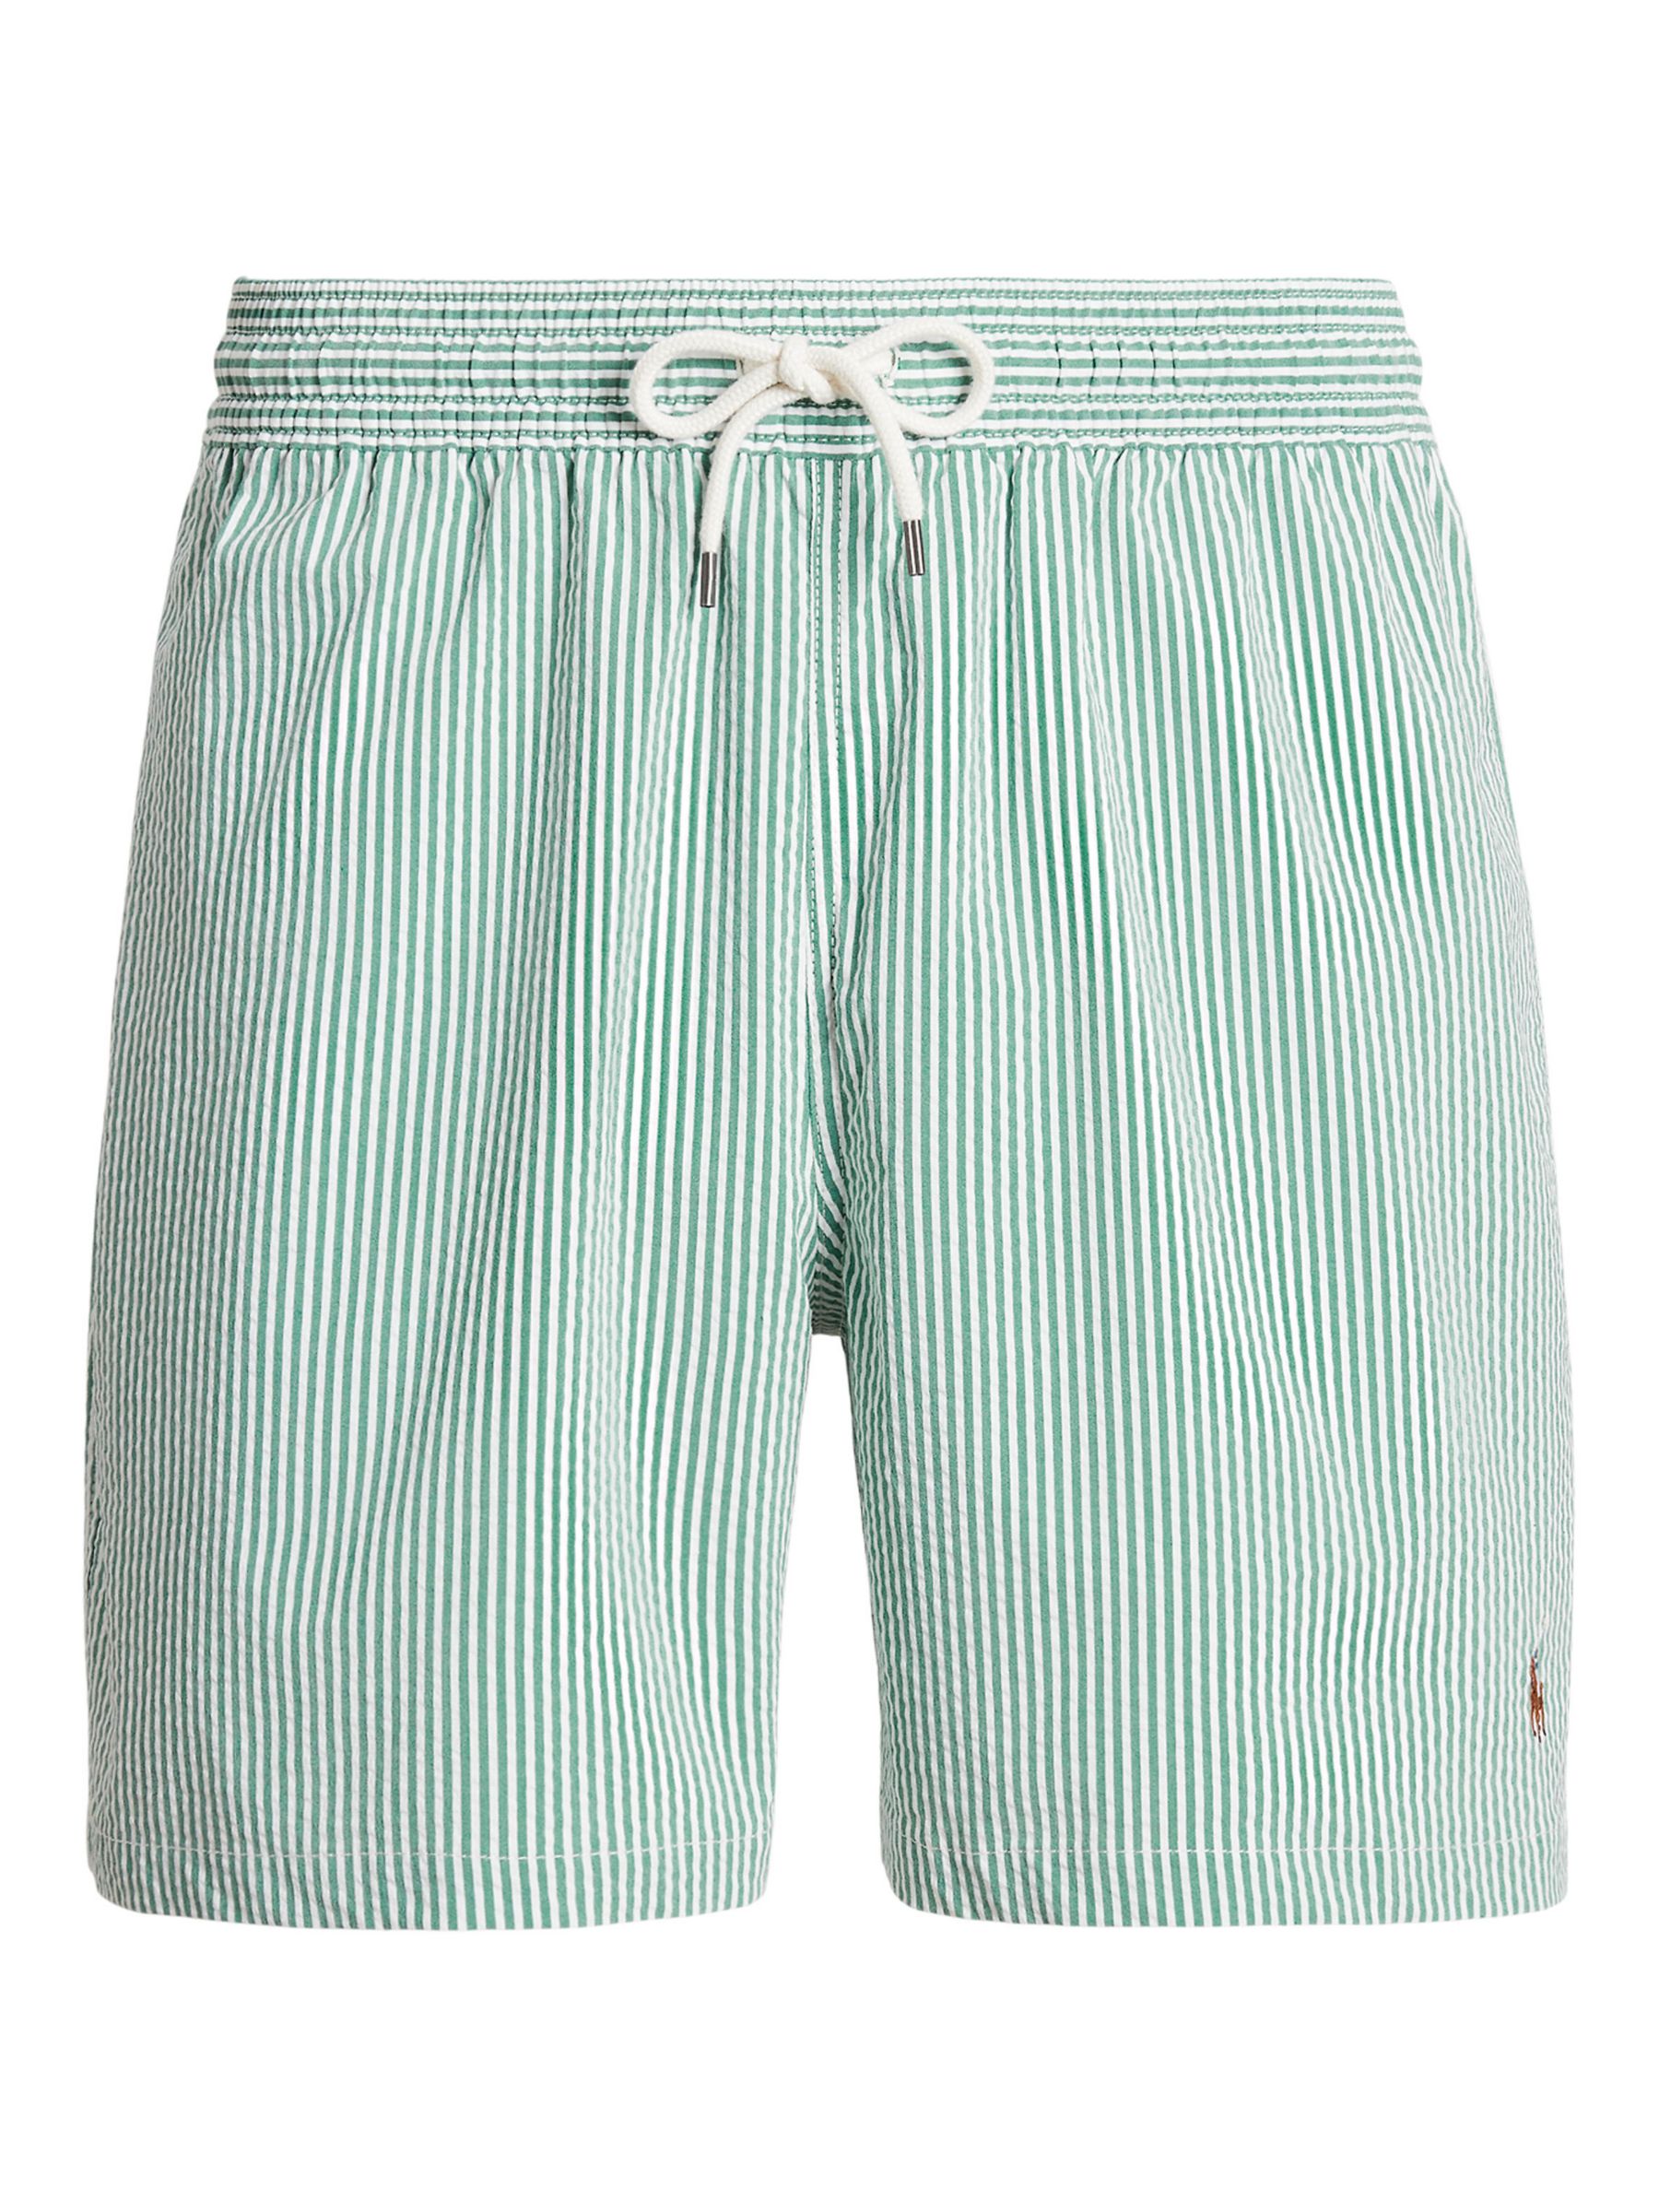 Polo Ralph Lauren Stripe Seersucker Swim Shorts, Green, M